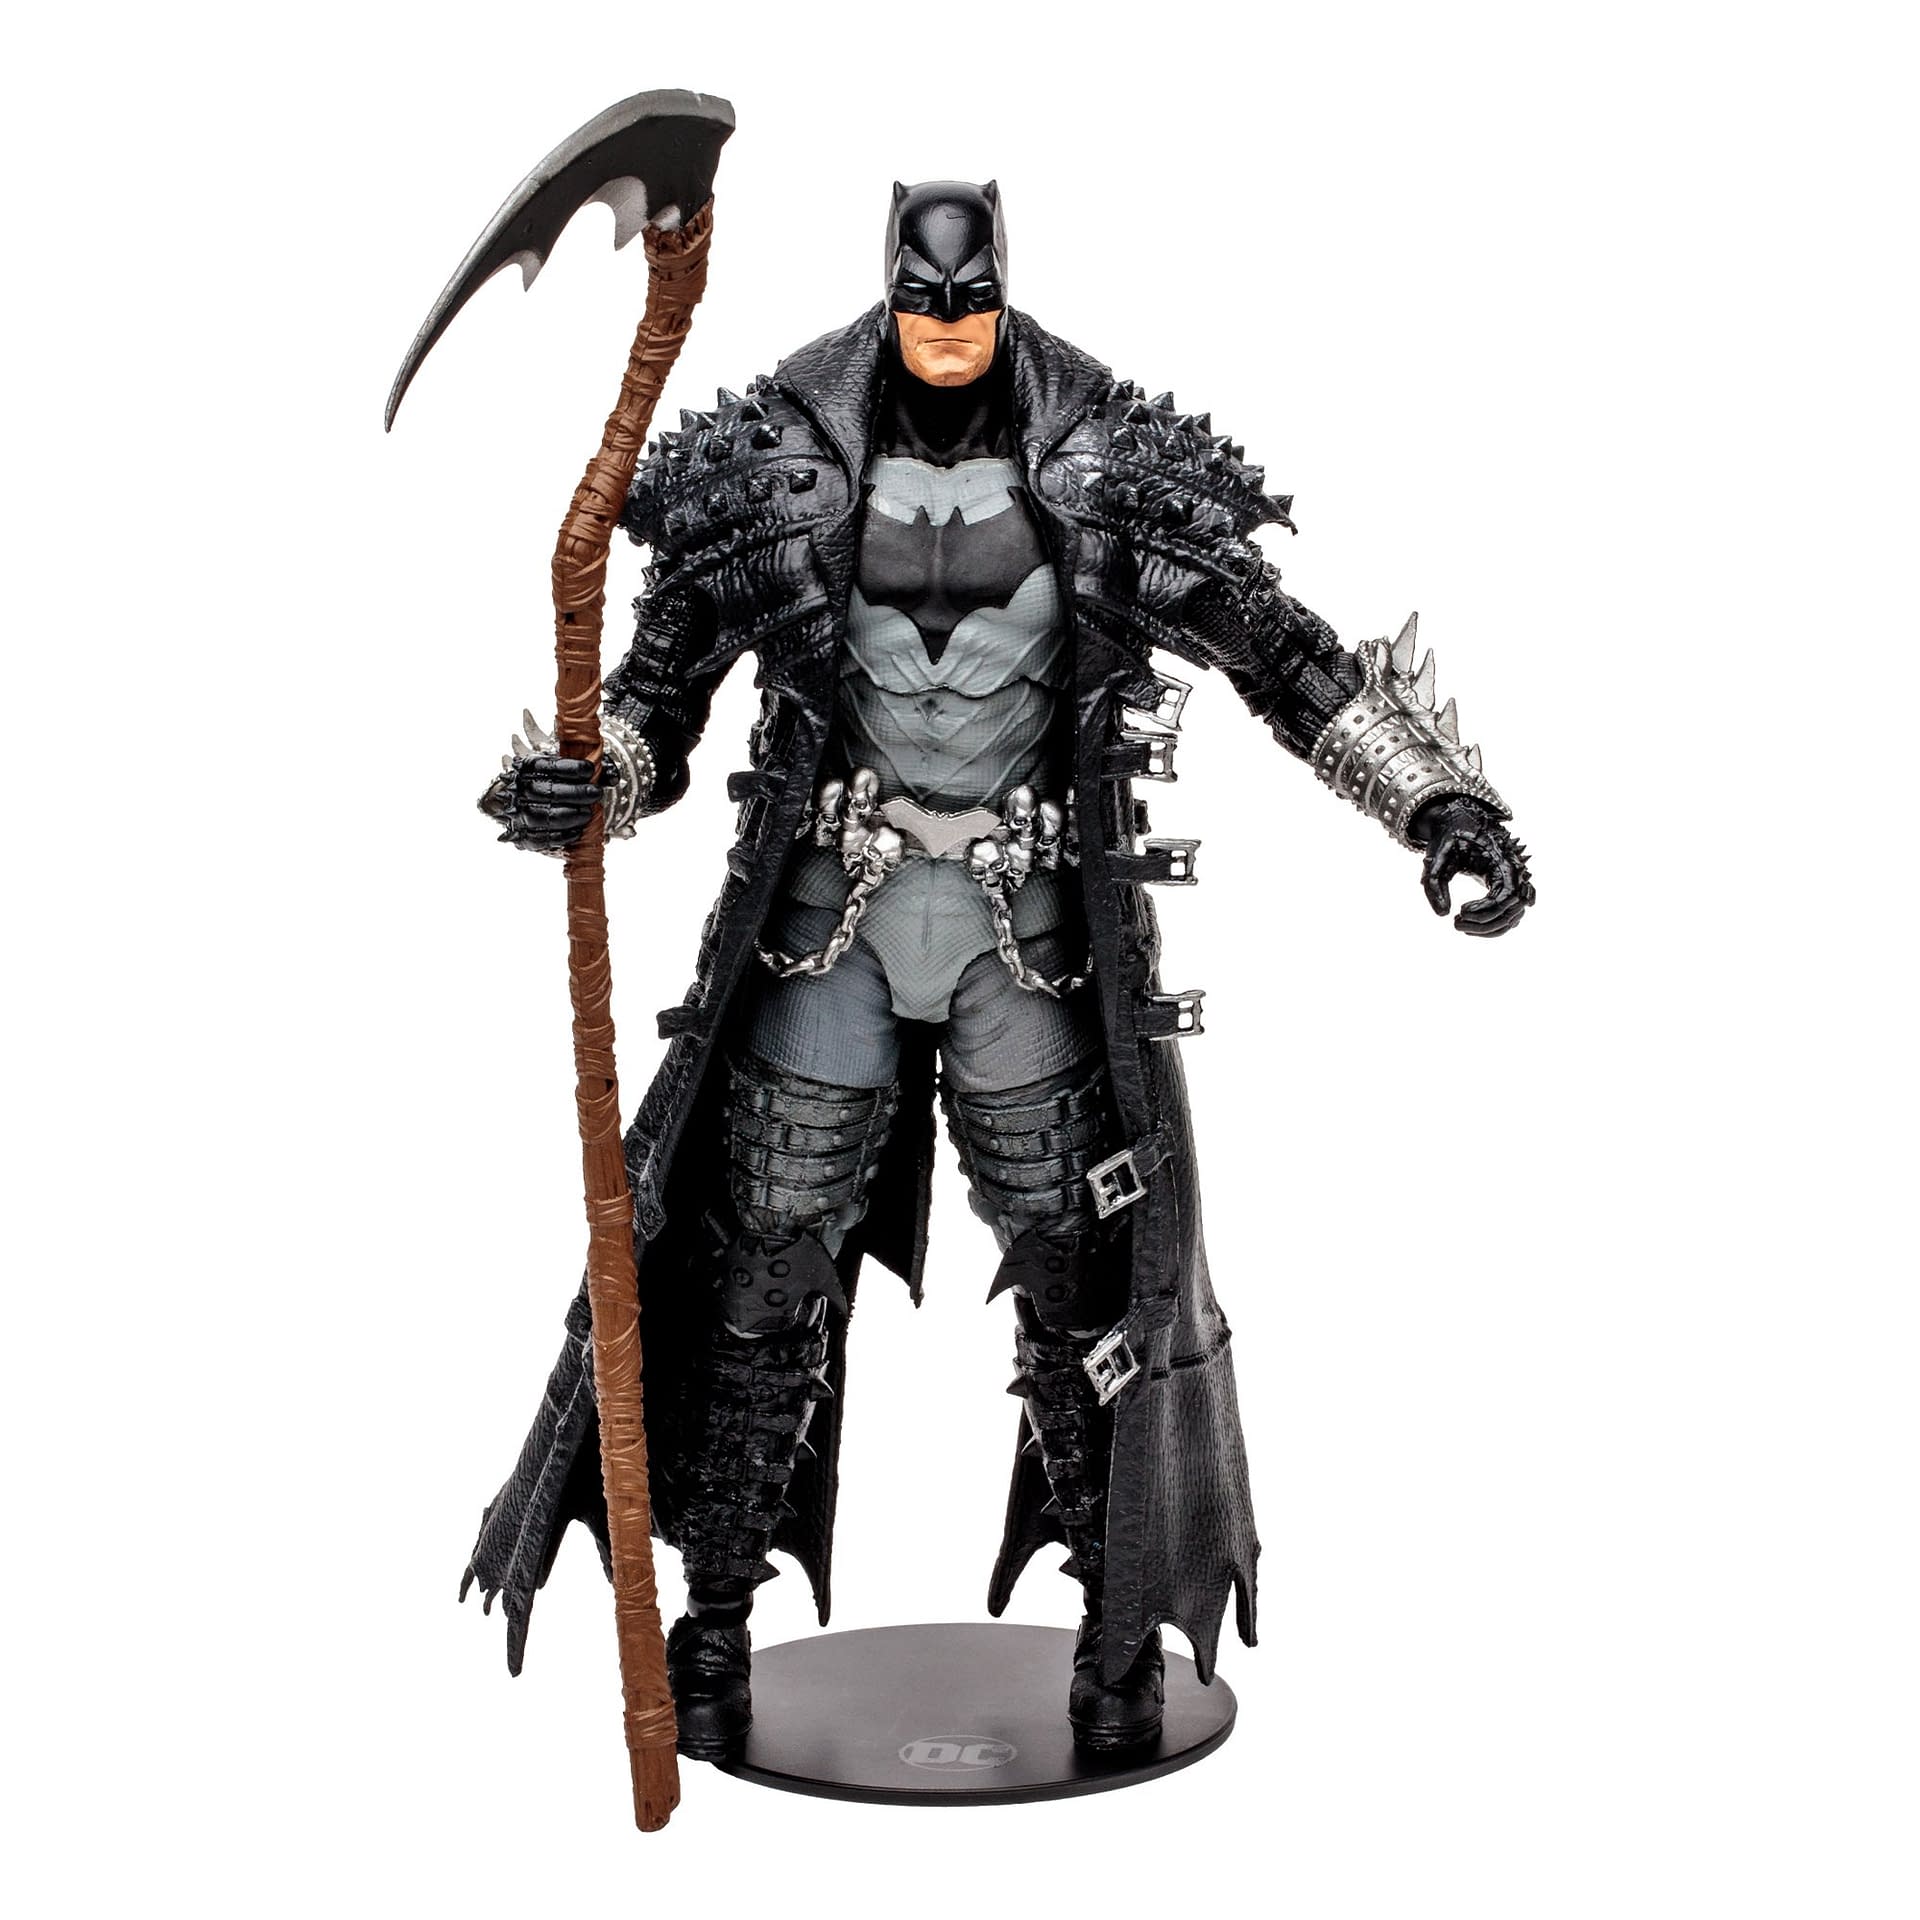 McFarlane Toys Reveals Dark Knight Death Metal Batmobeast 2-Pack